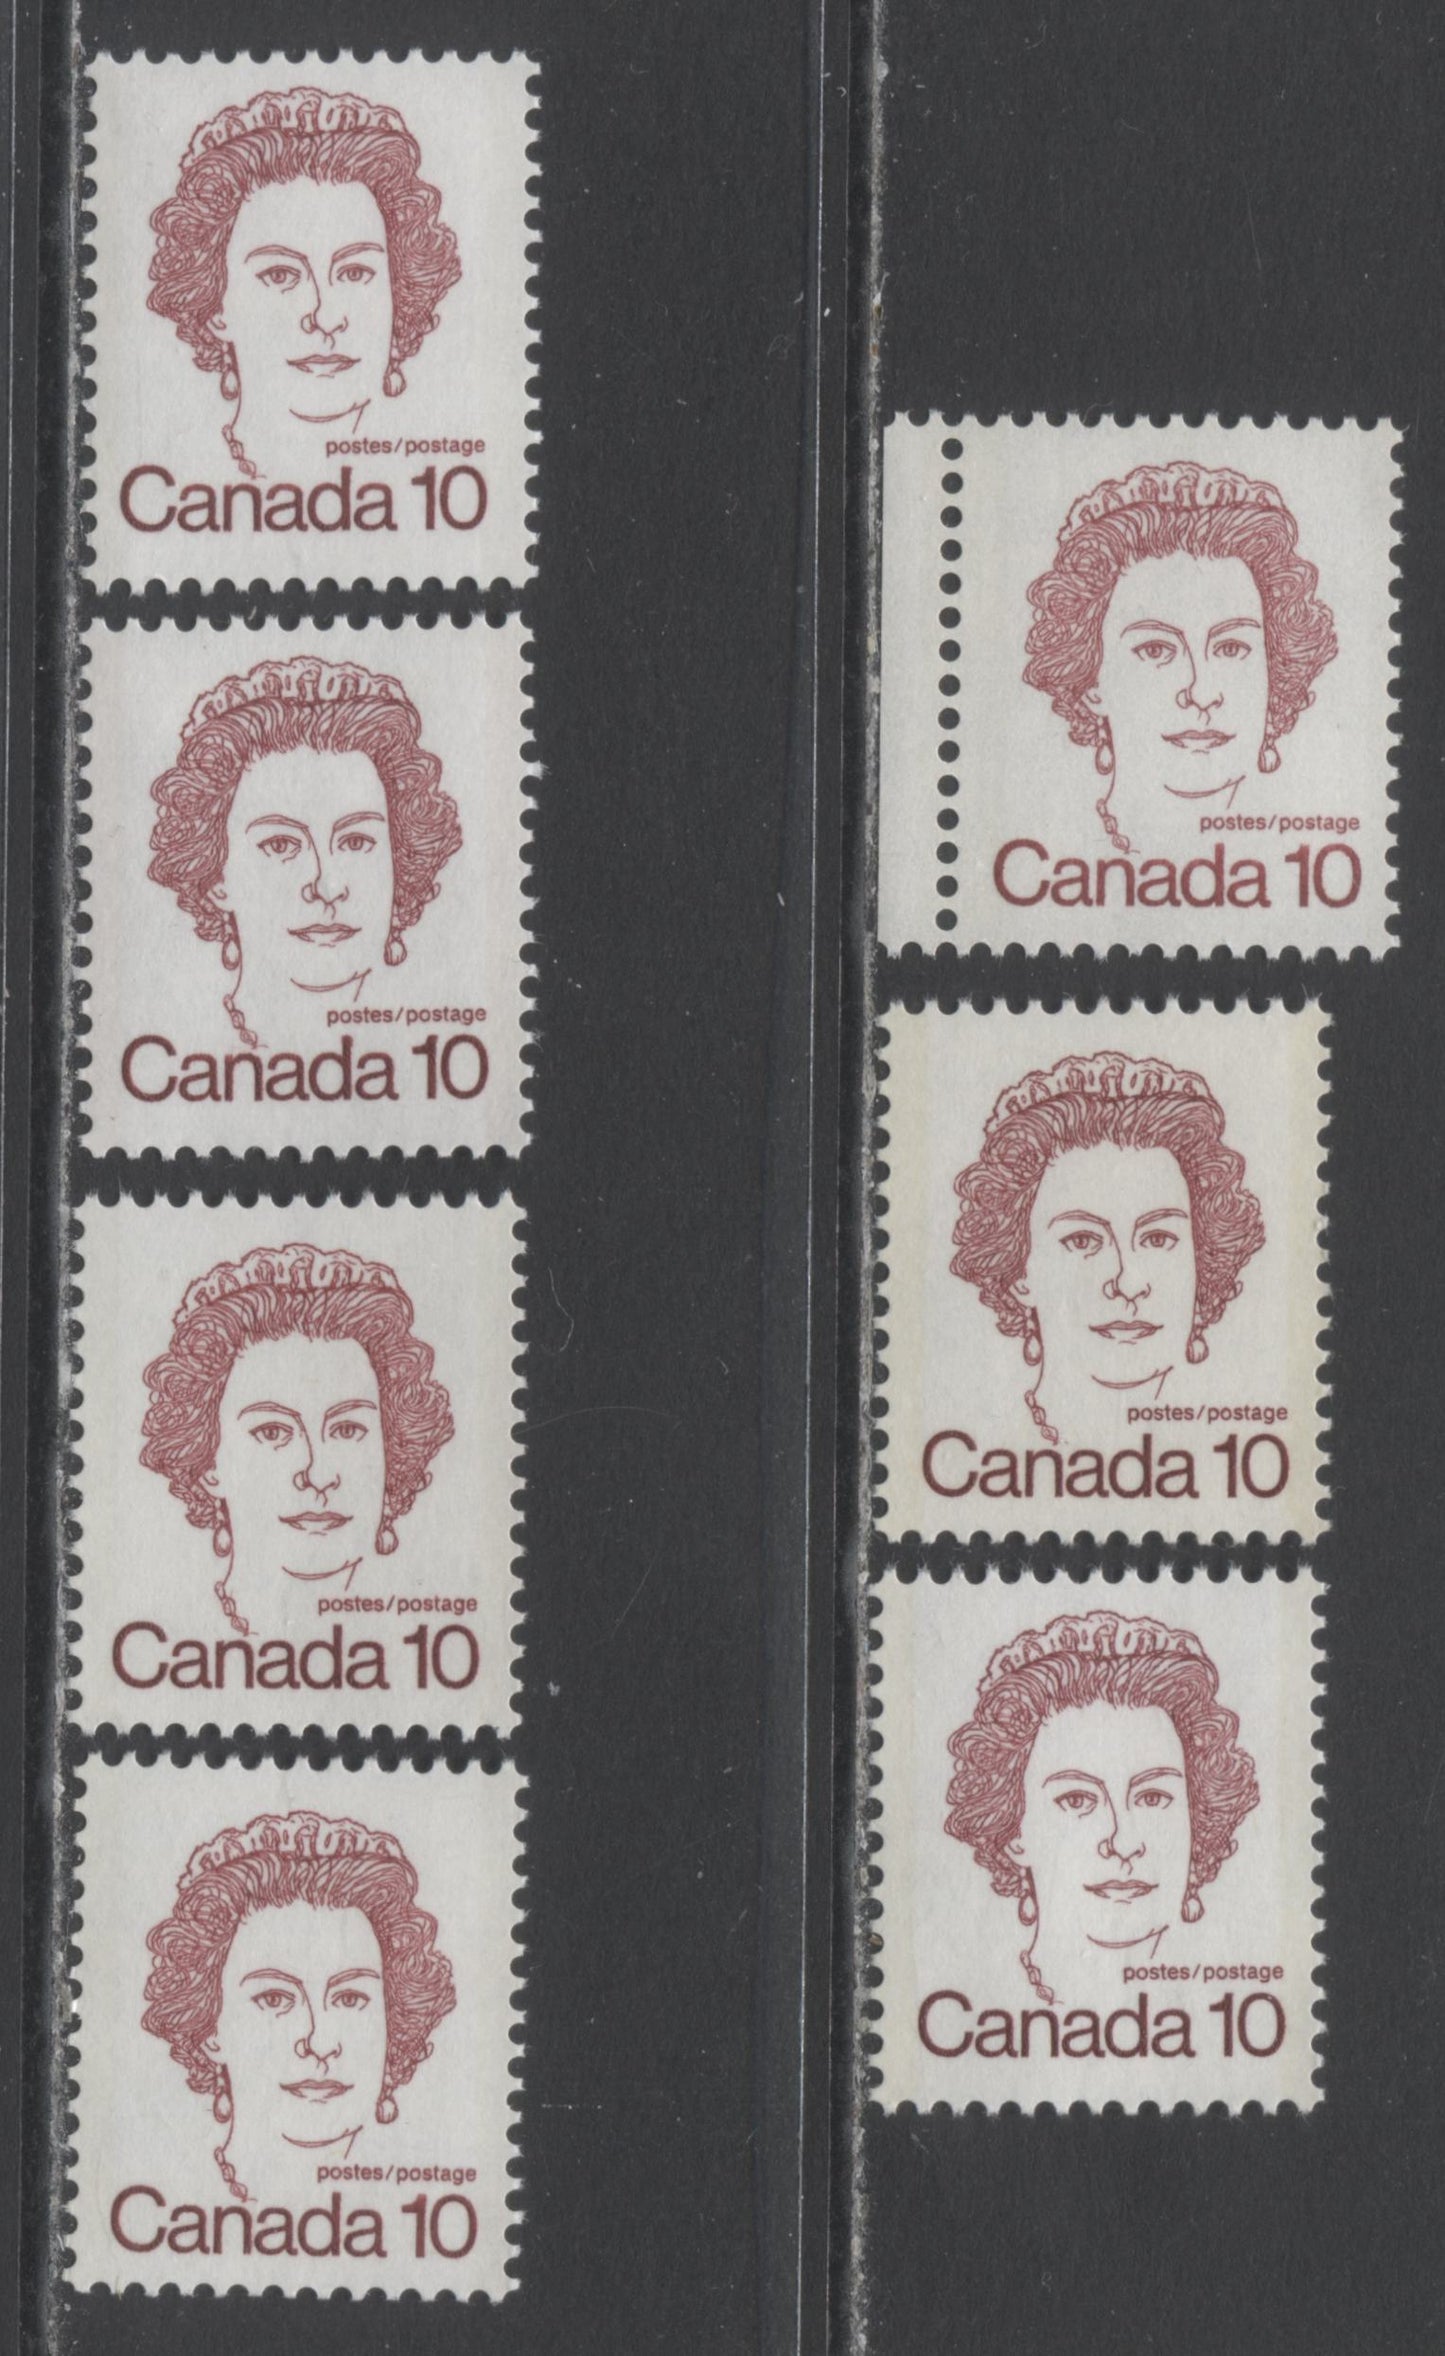 Lot 330 Canada #593A-593Aiii 10c Dark Carmine Queen Elizabeth II, 1973 - 1976 Caricature Issue, 7 VFNH Singles On NF, DF, LF, MF Papers